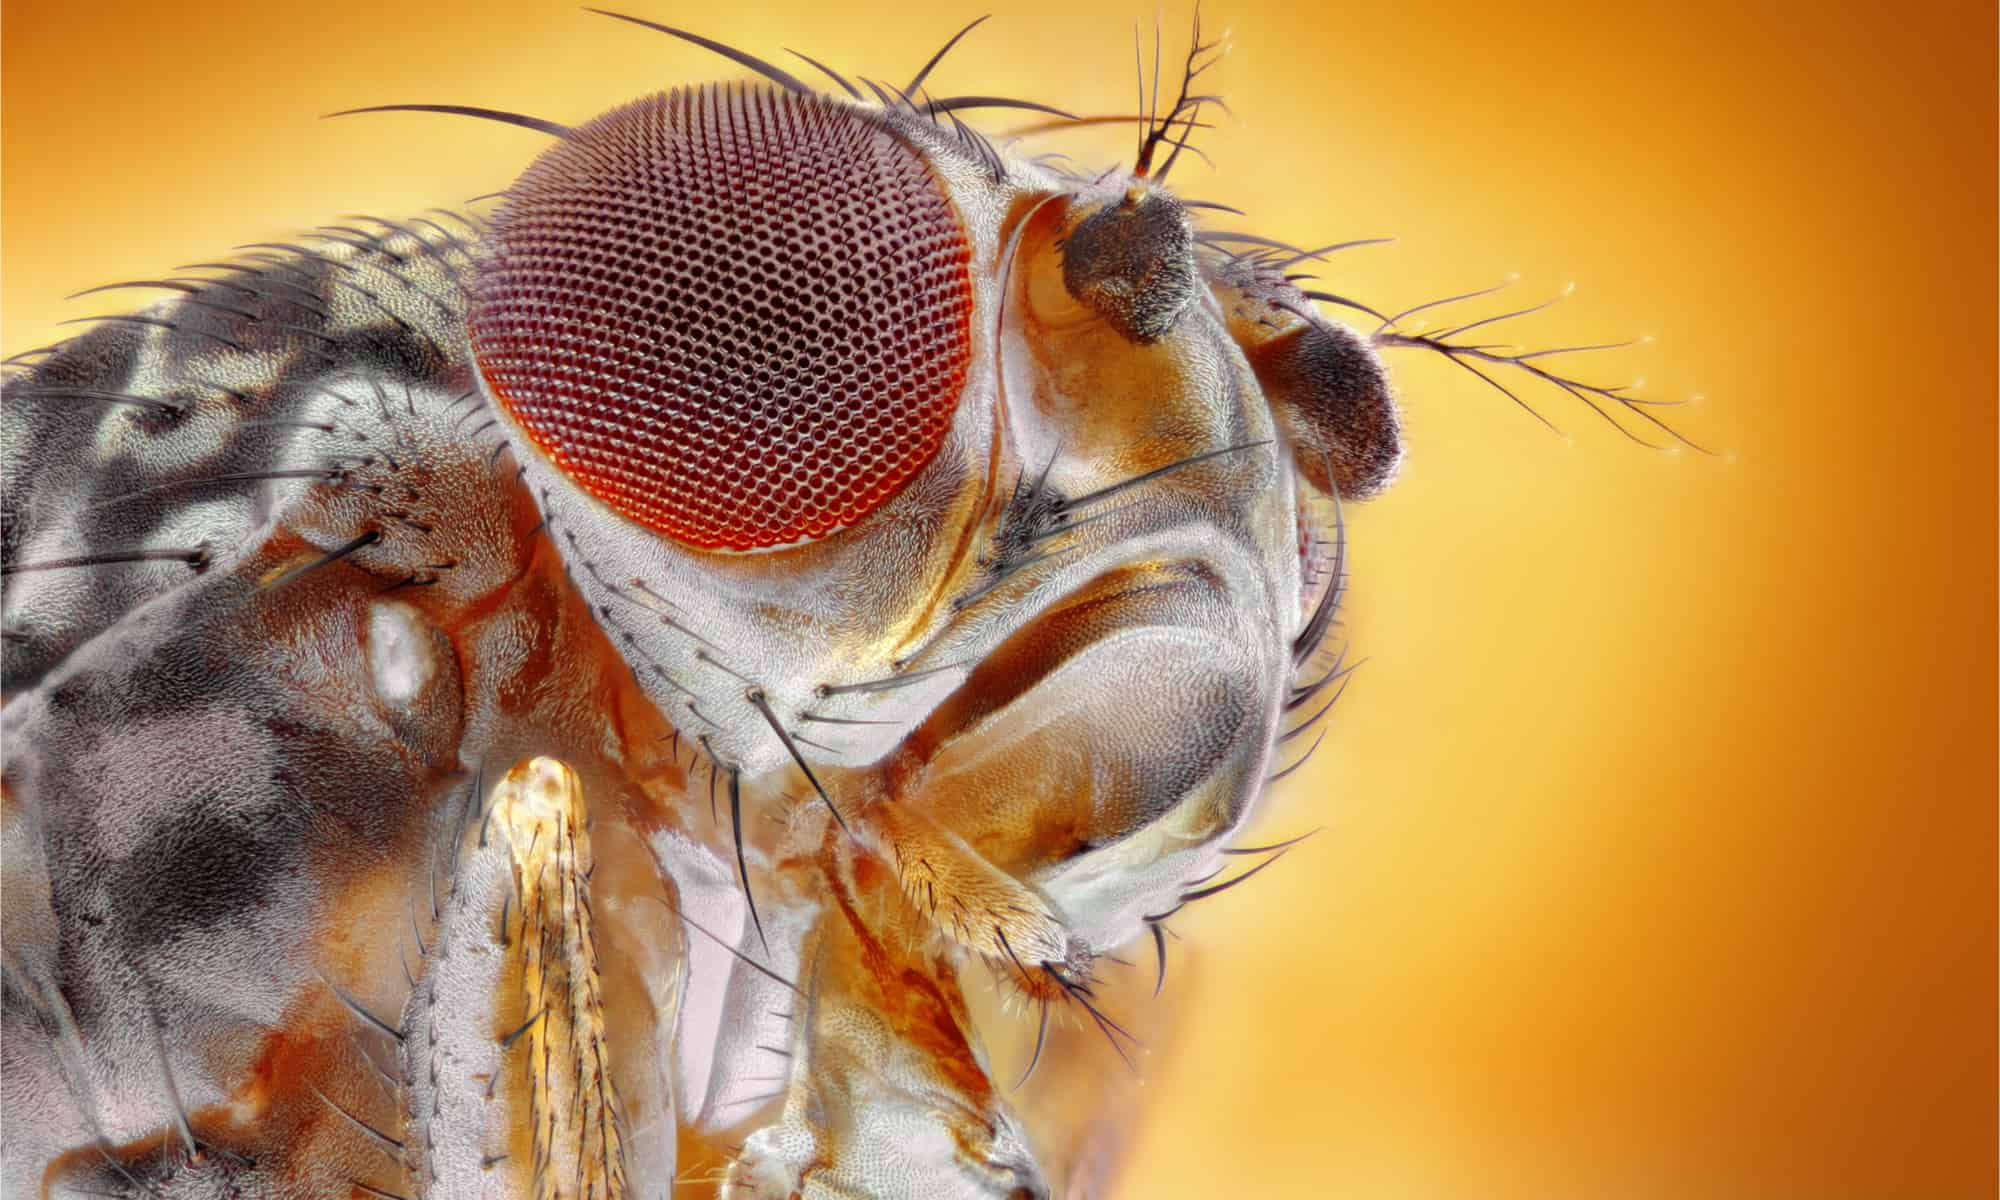 https://a-z-animals.com/media/2022/05/fruit-fly-close-up.jpg